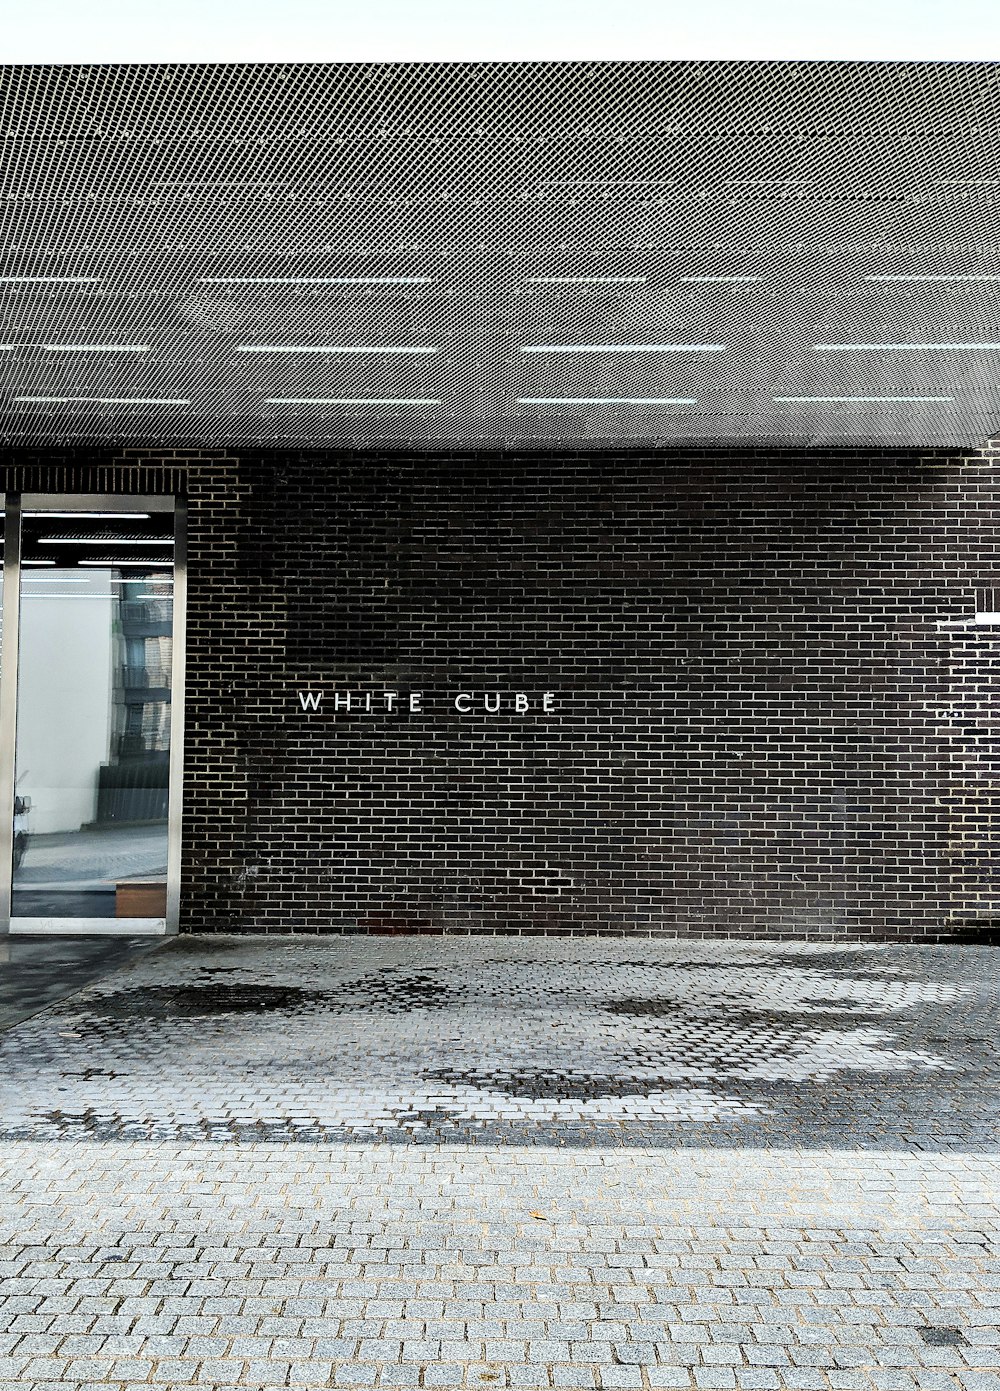 White Cube building